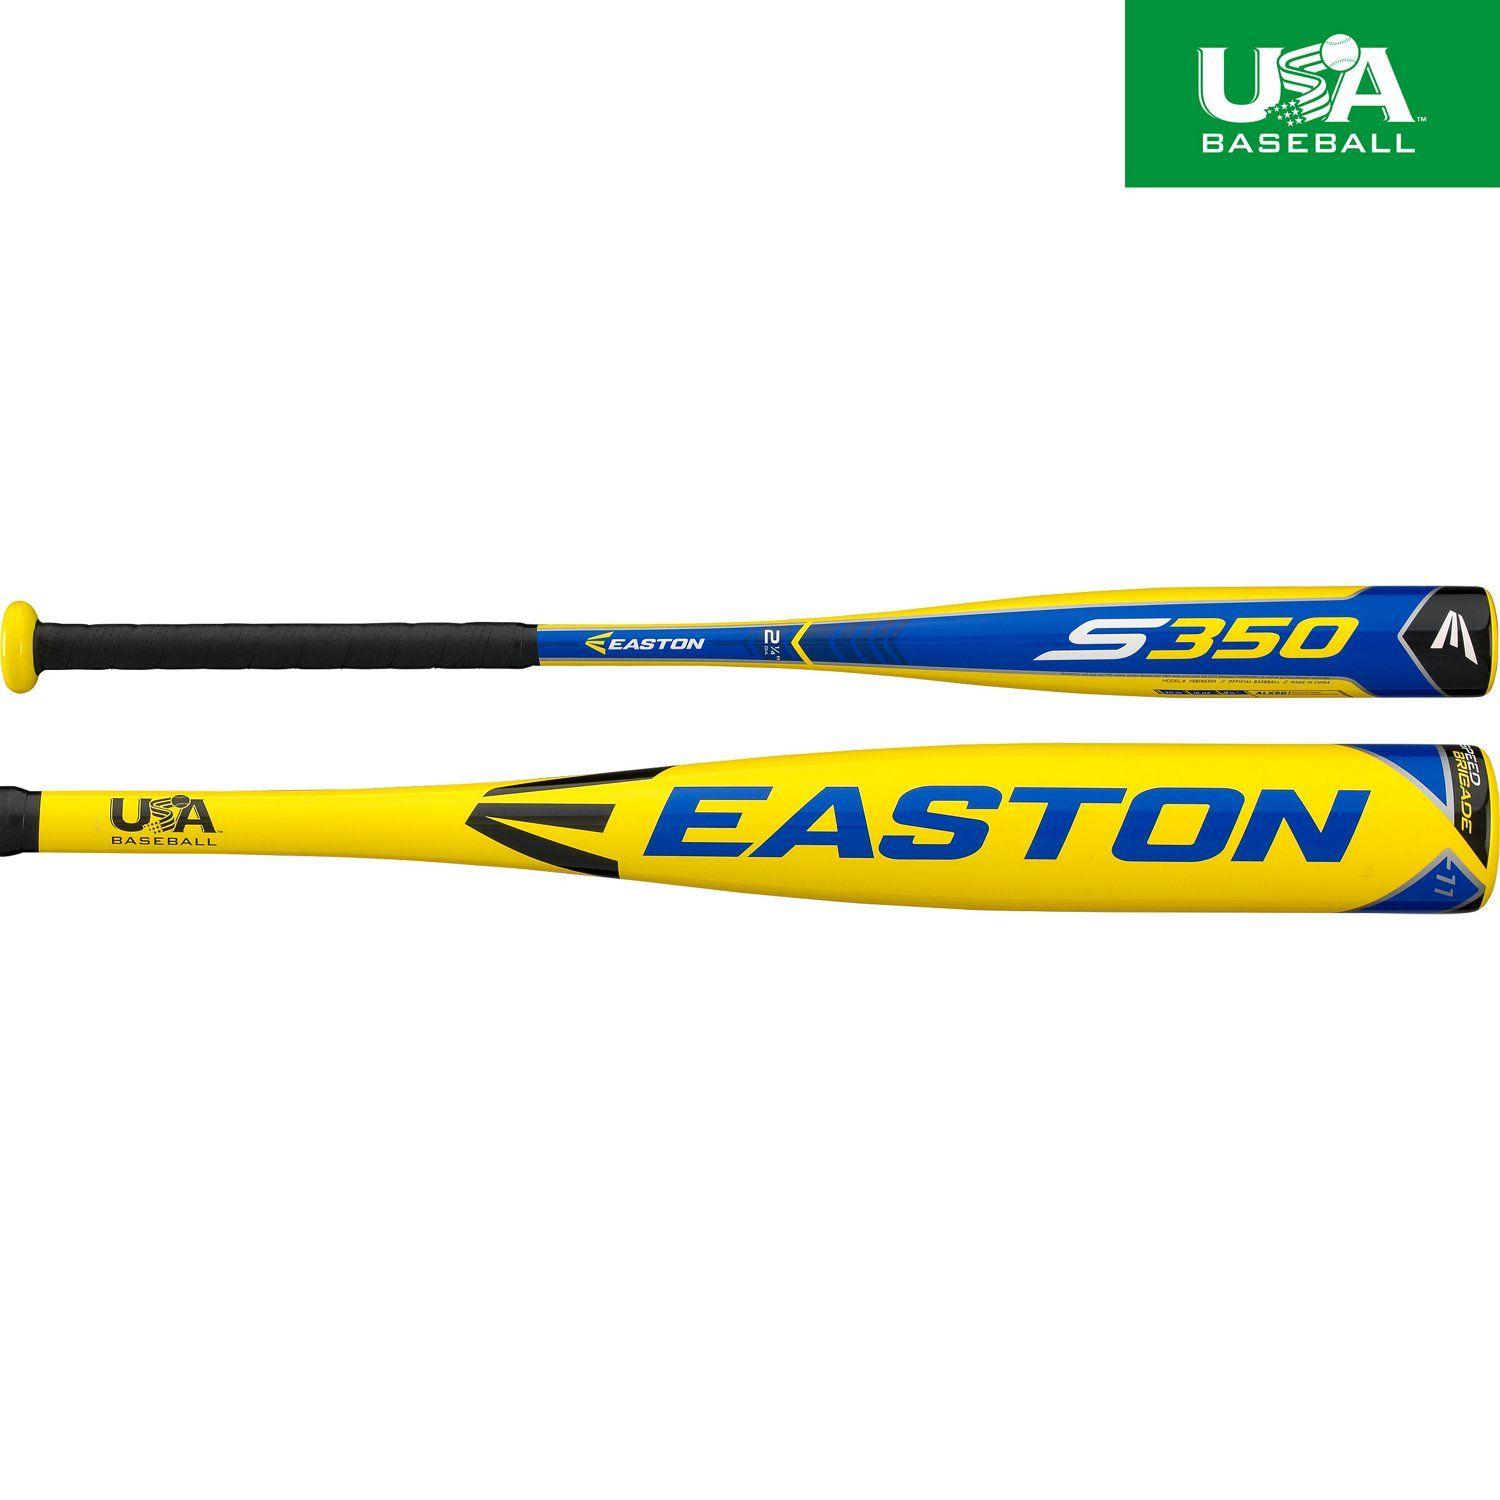 Easton Bat Logo - Baseball Bats | Youth Bats, Wood bats, Softball Bats | Academy